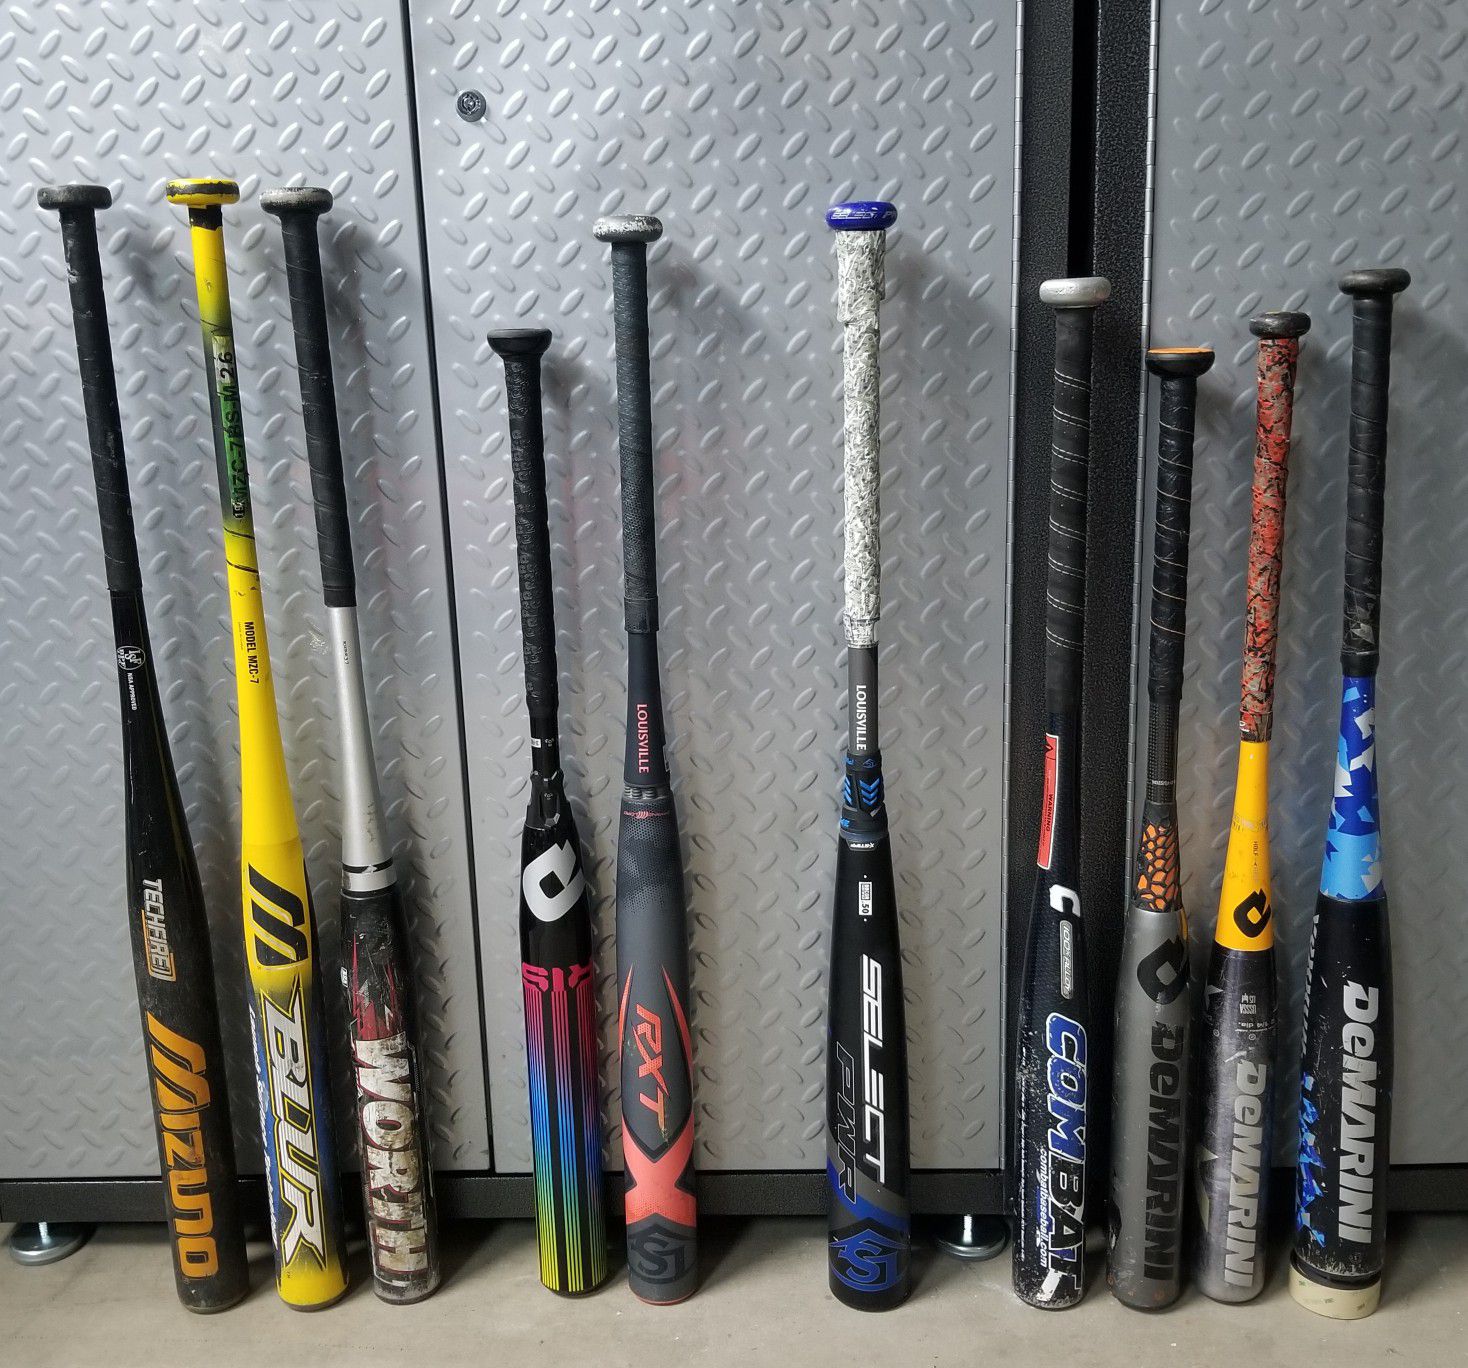 Softball, Baseball, and Youth Bats